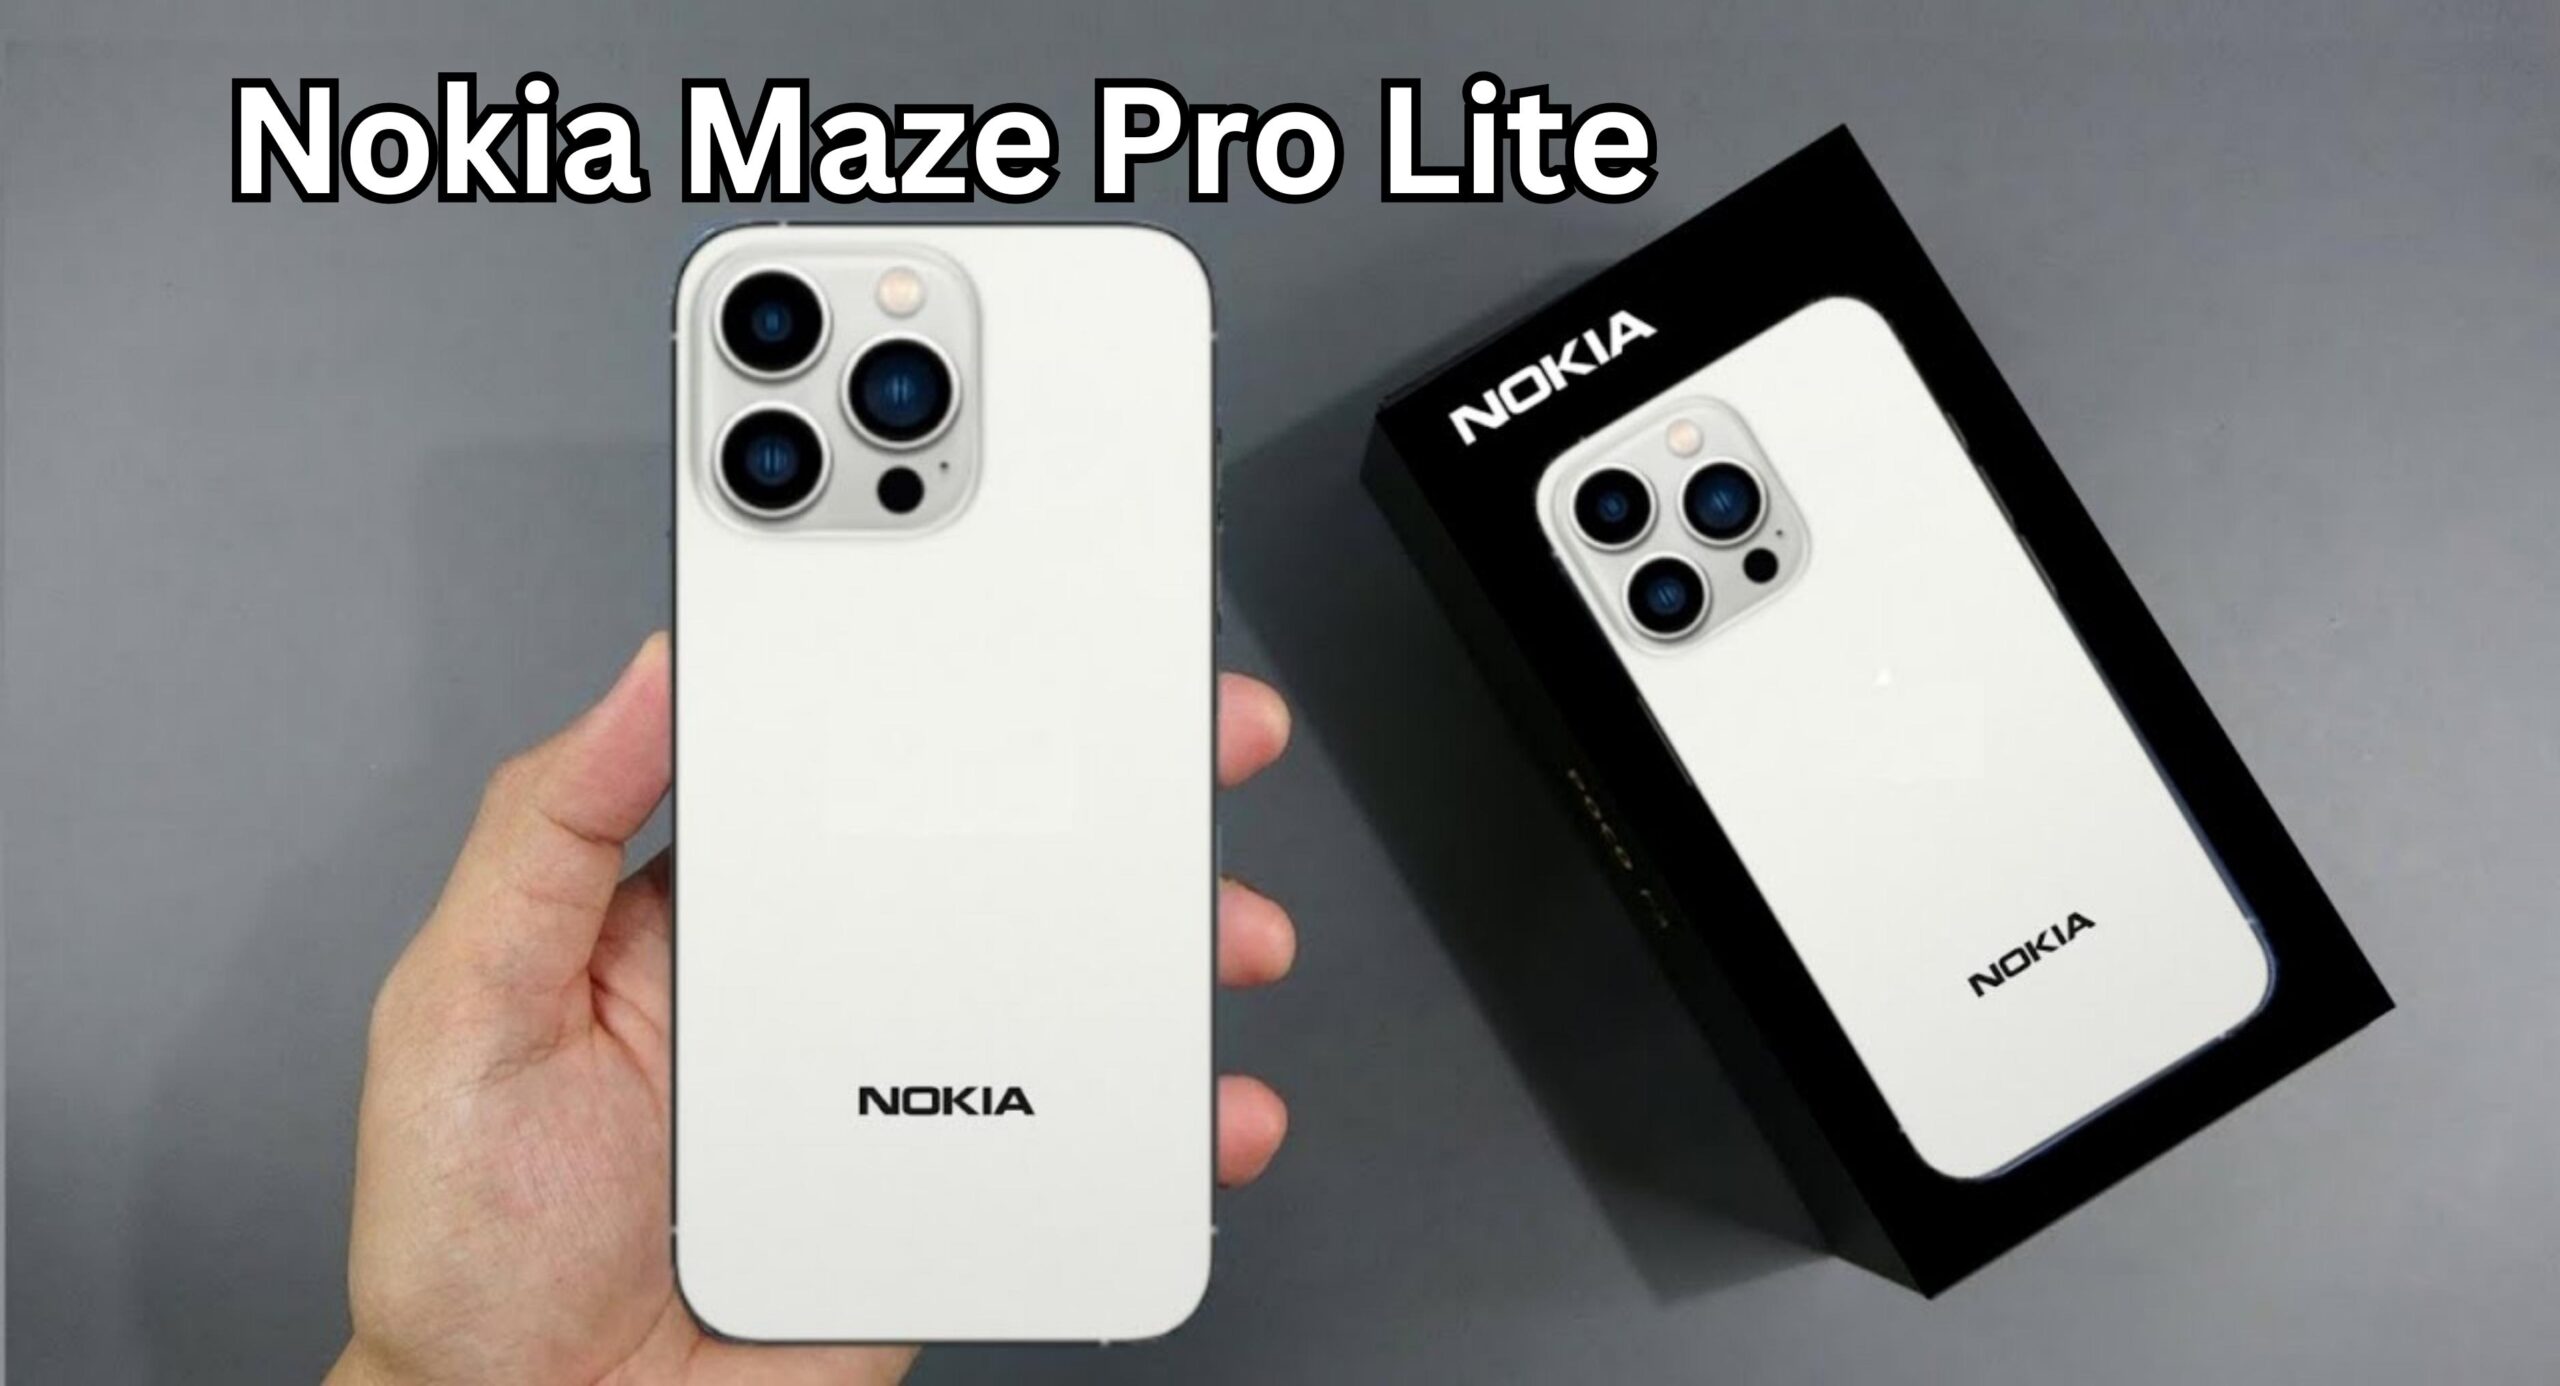 upcoming Nokia Maze Pro Lite